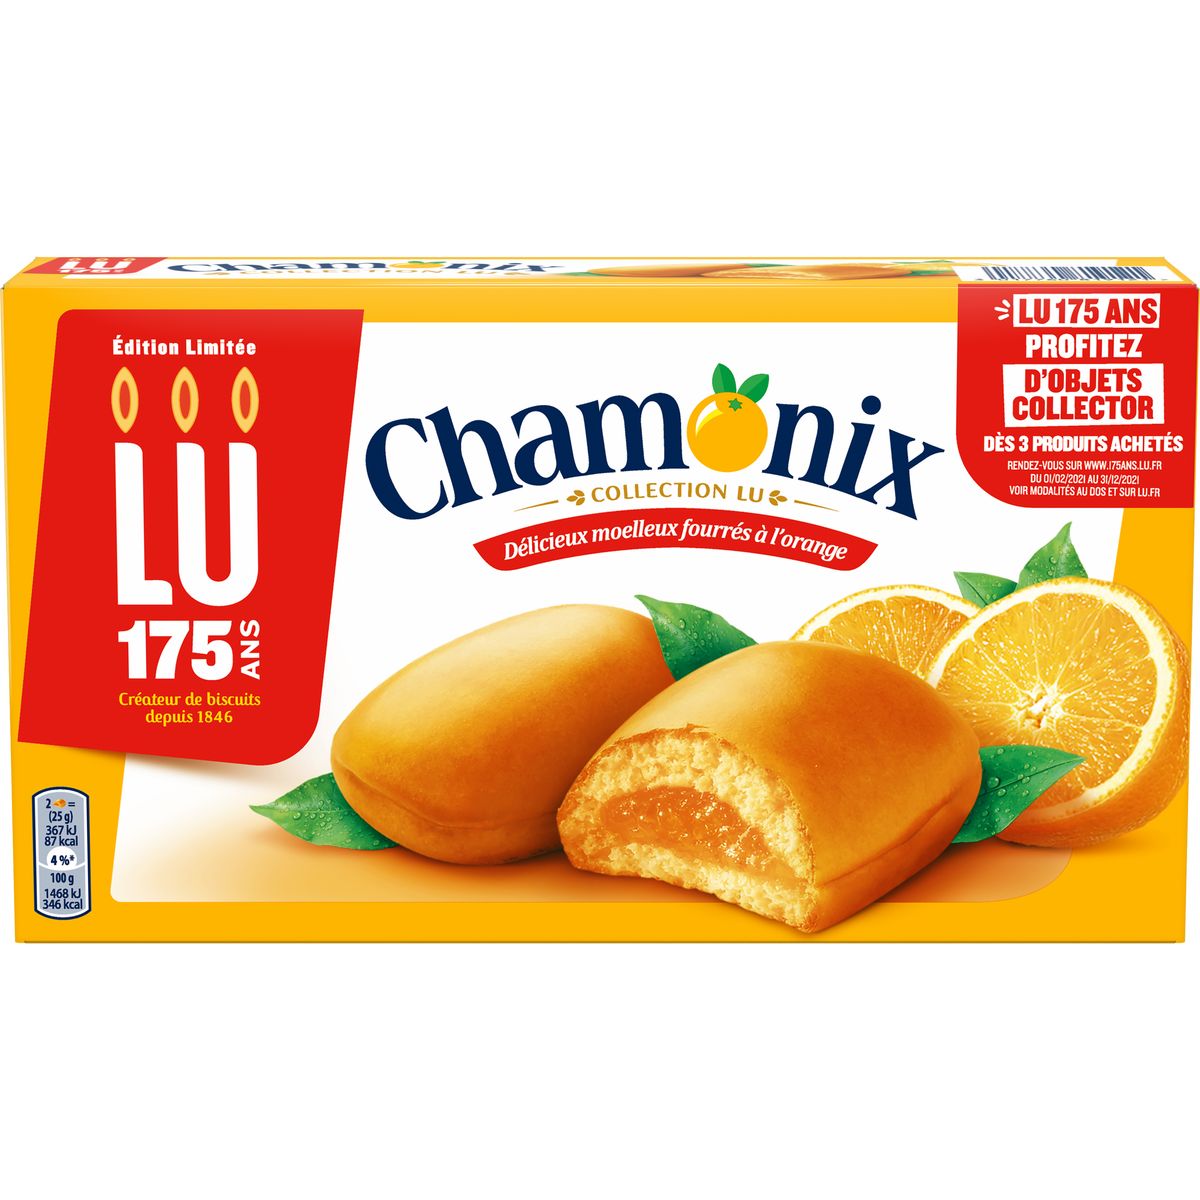 Lu Chamonix Moelleux Fourres A L Orange 250g Pas Cher A Prix Auchan